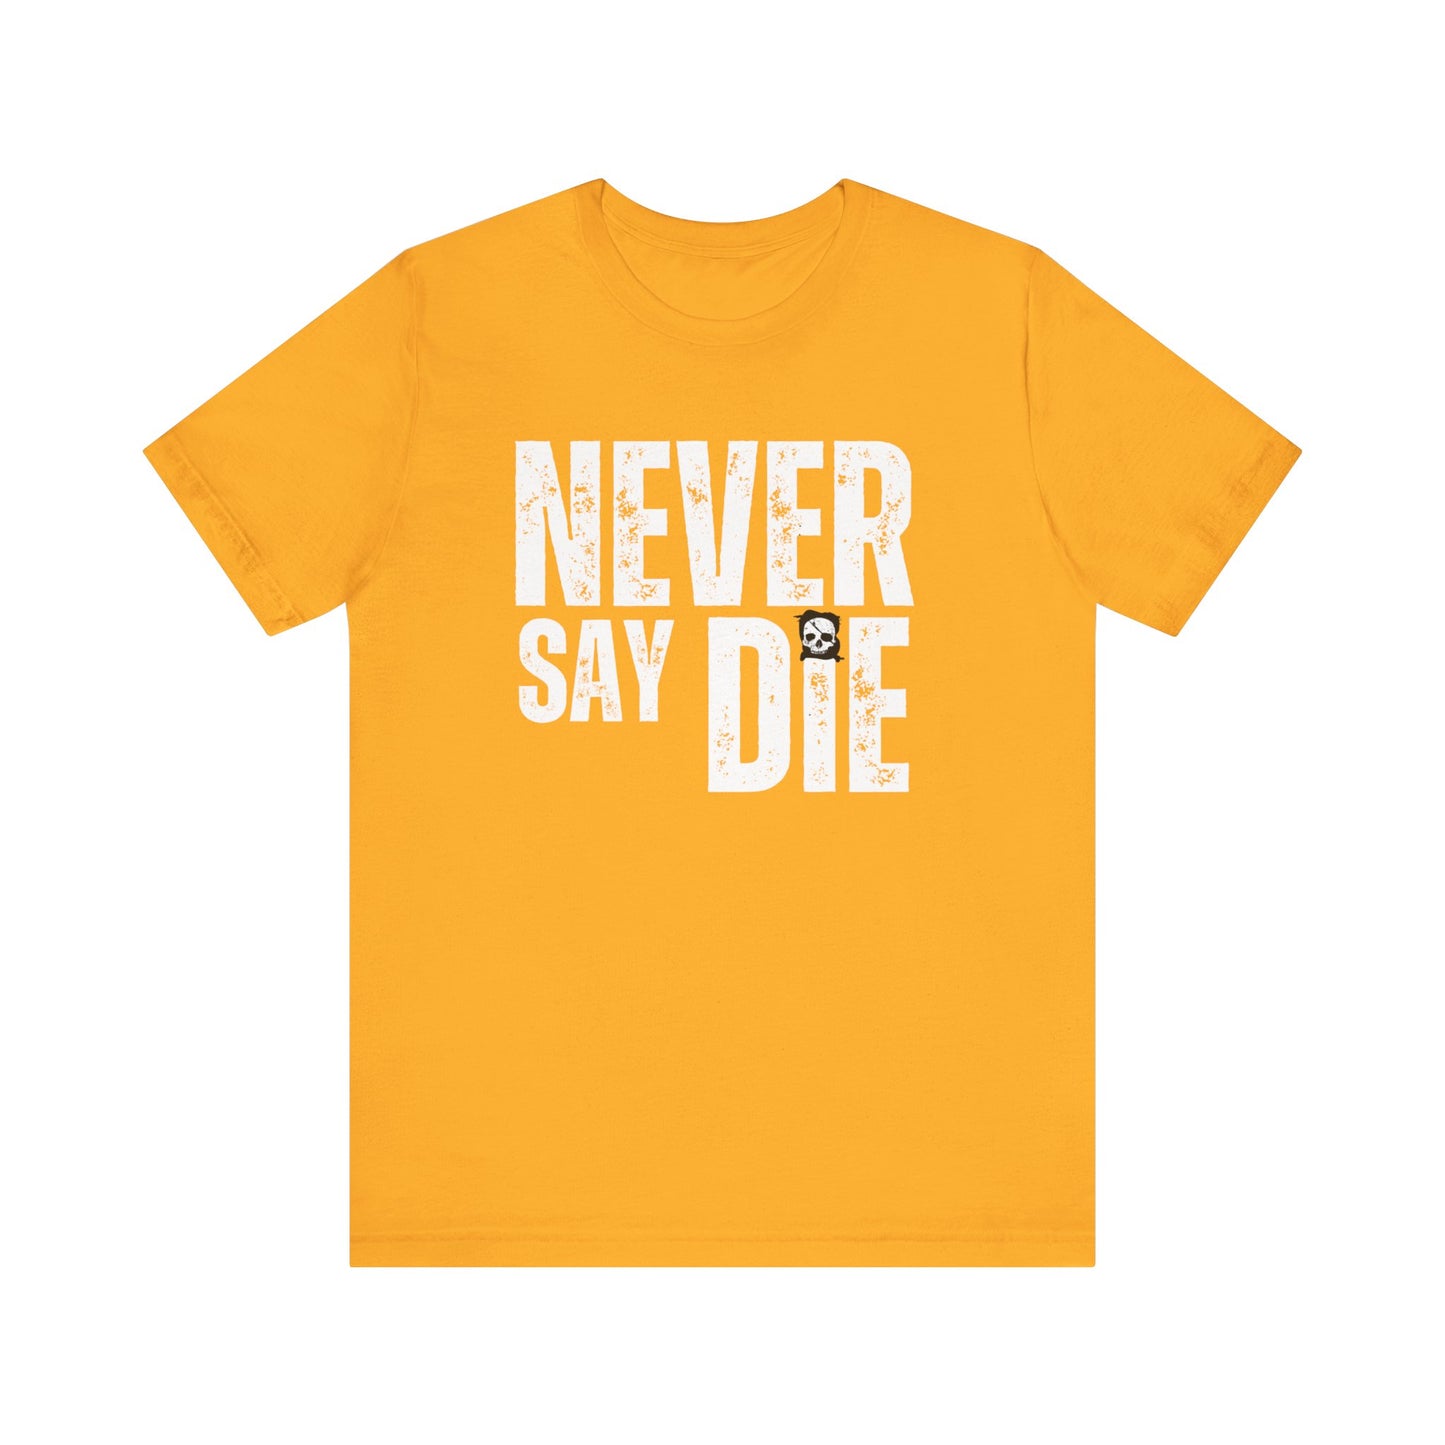 Never Say Die (Entrepreneur's Creed T-shirt)